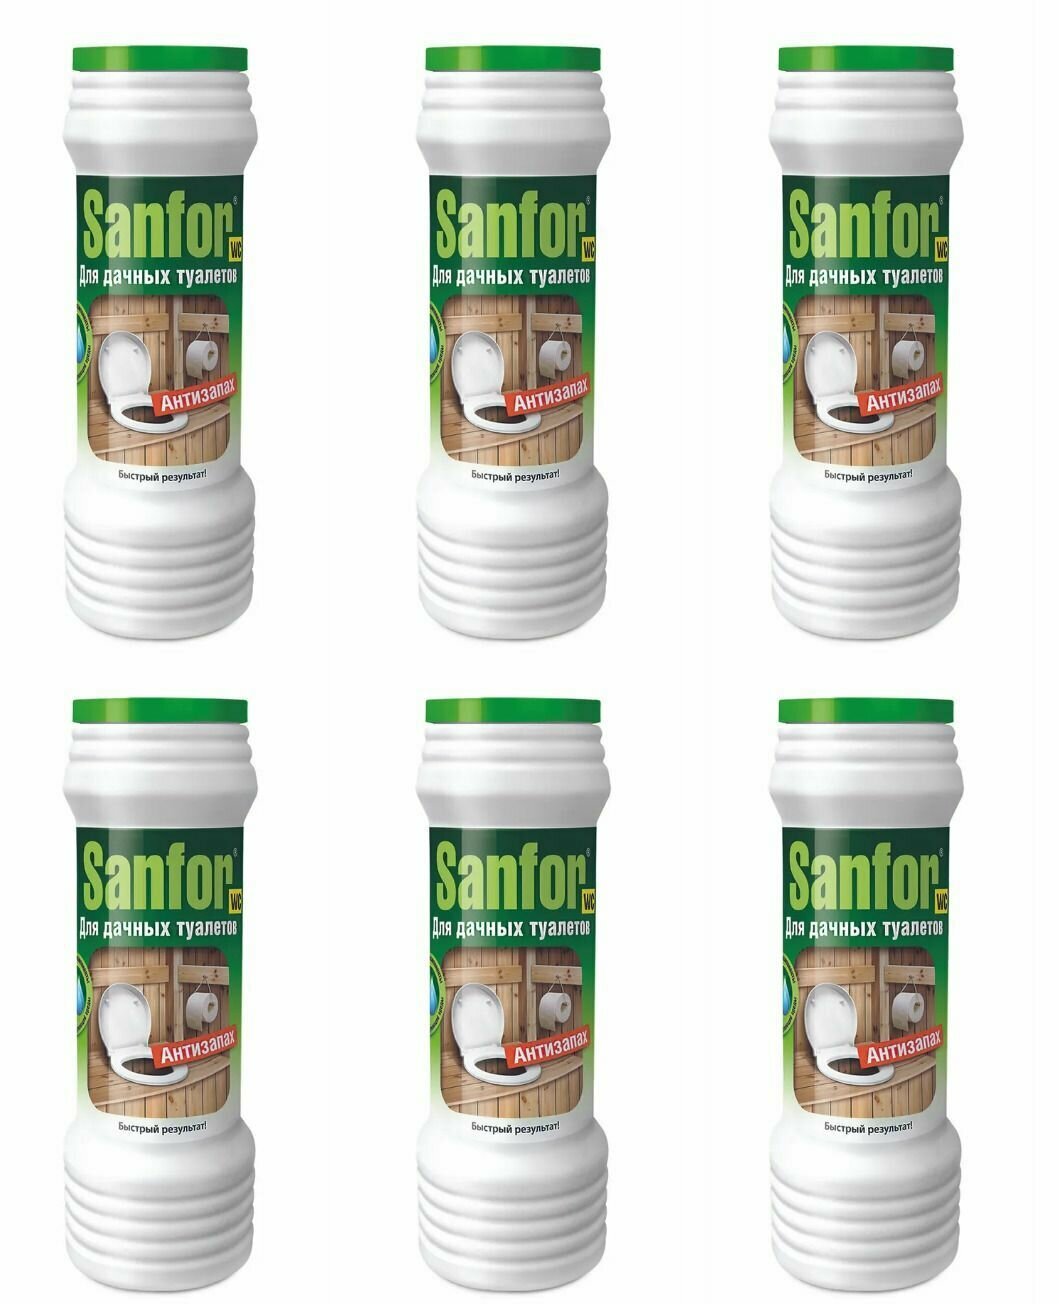 Sanfor Средство дезодорирующее для дачных туалетов Антизапах, 400 г, 6 шт